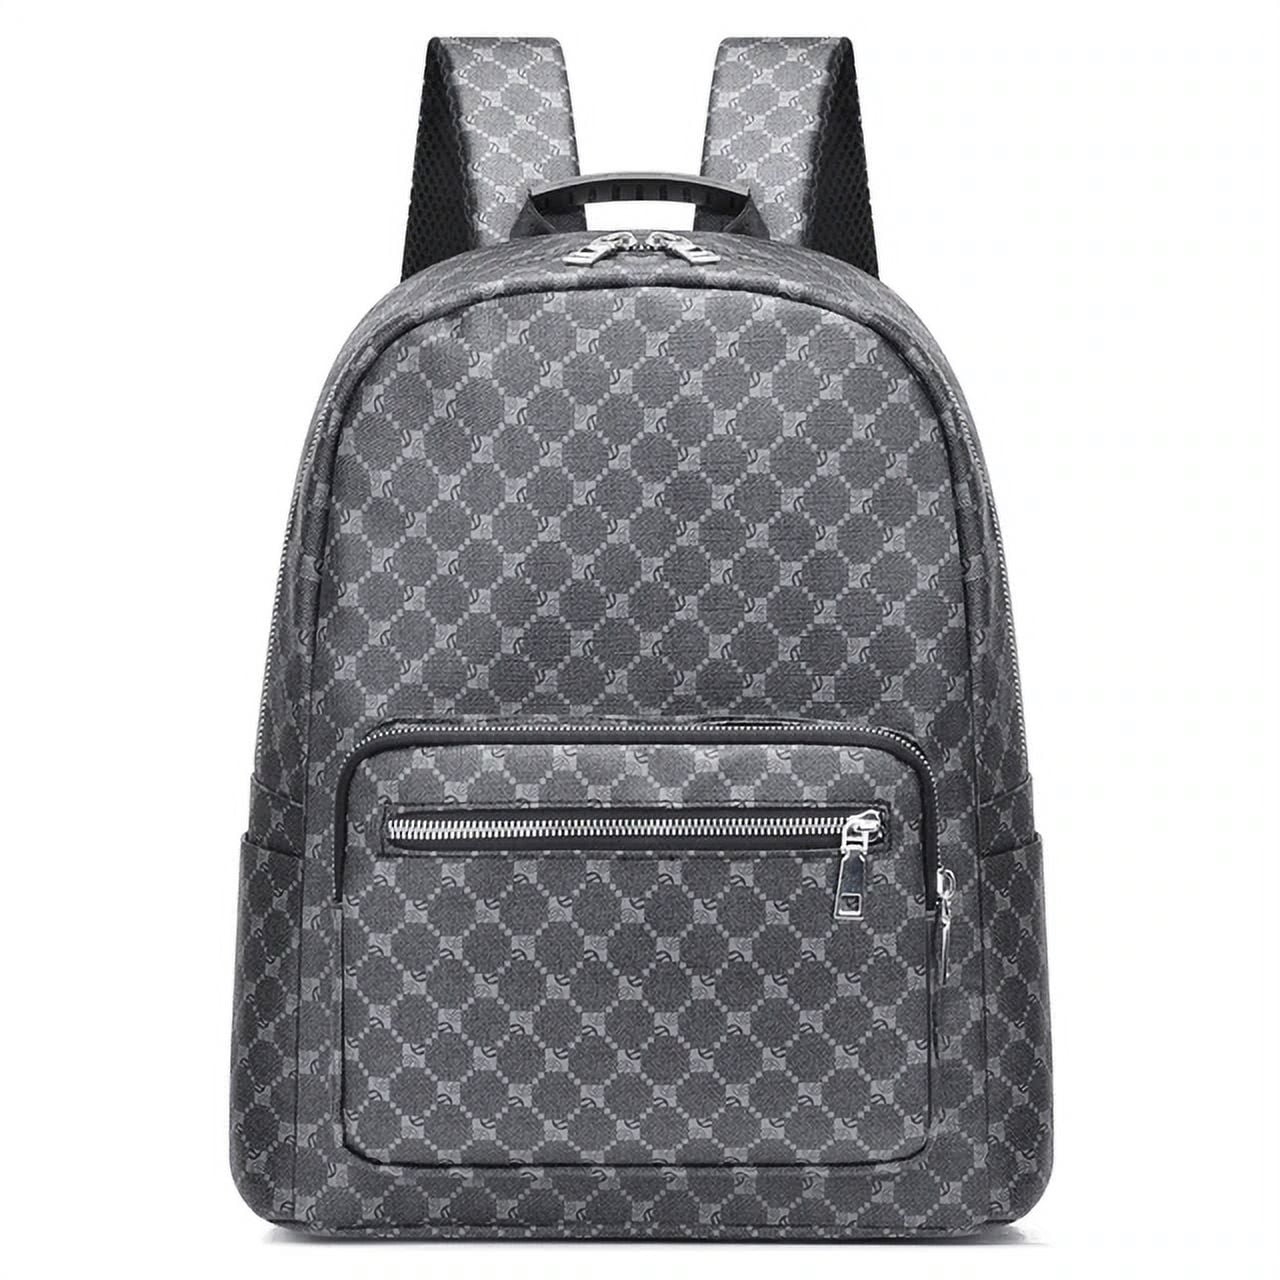 Luxury Brand Women Backpack Bags Multifunction Vegan Leather